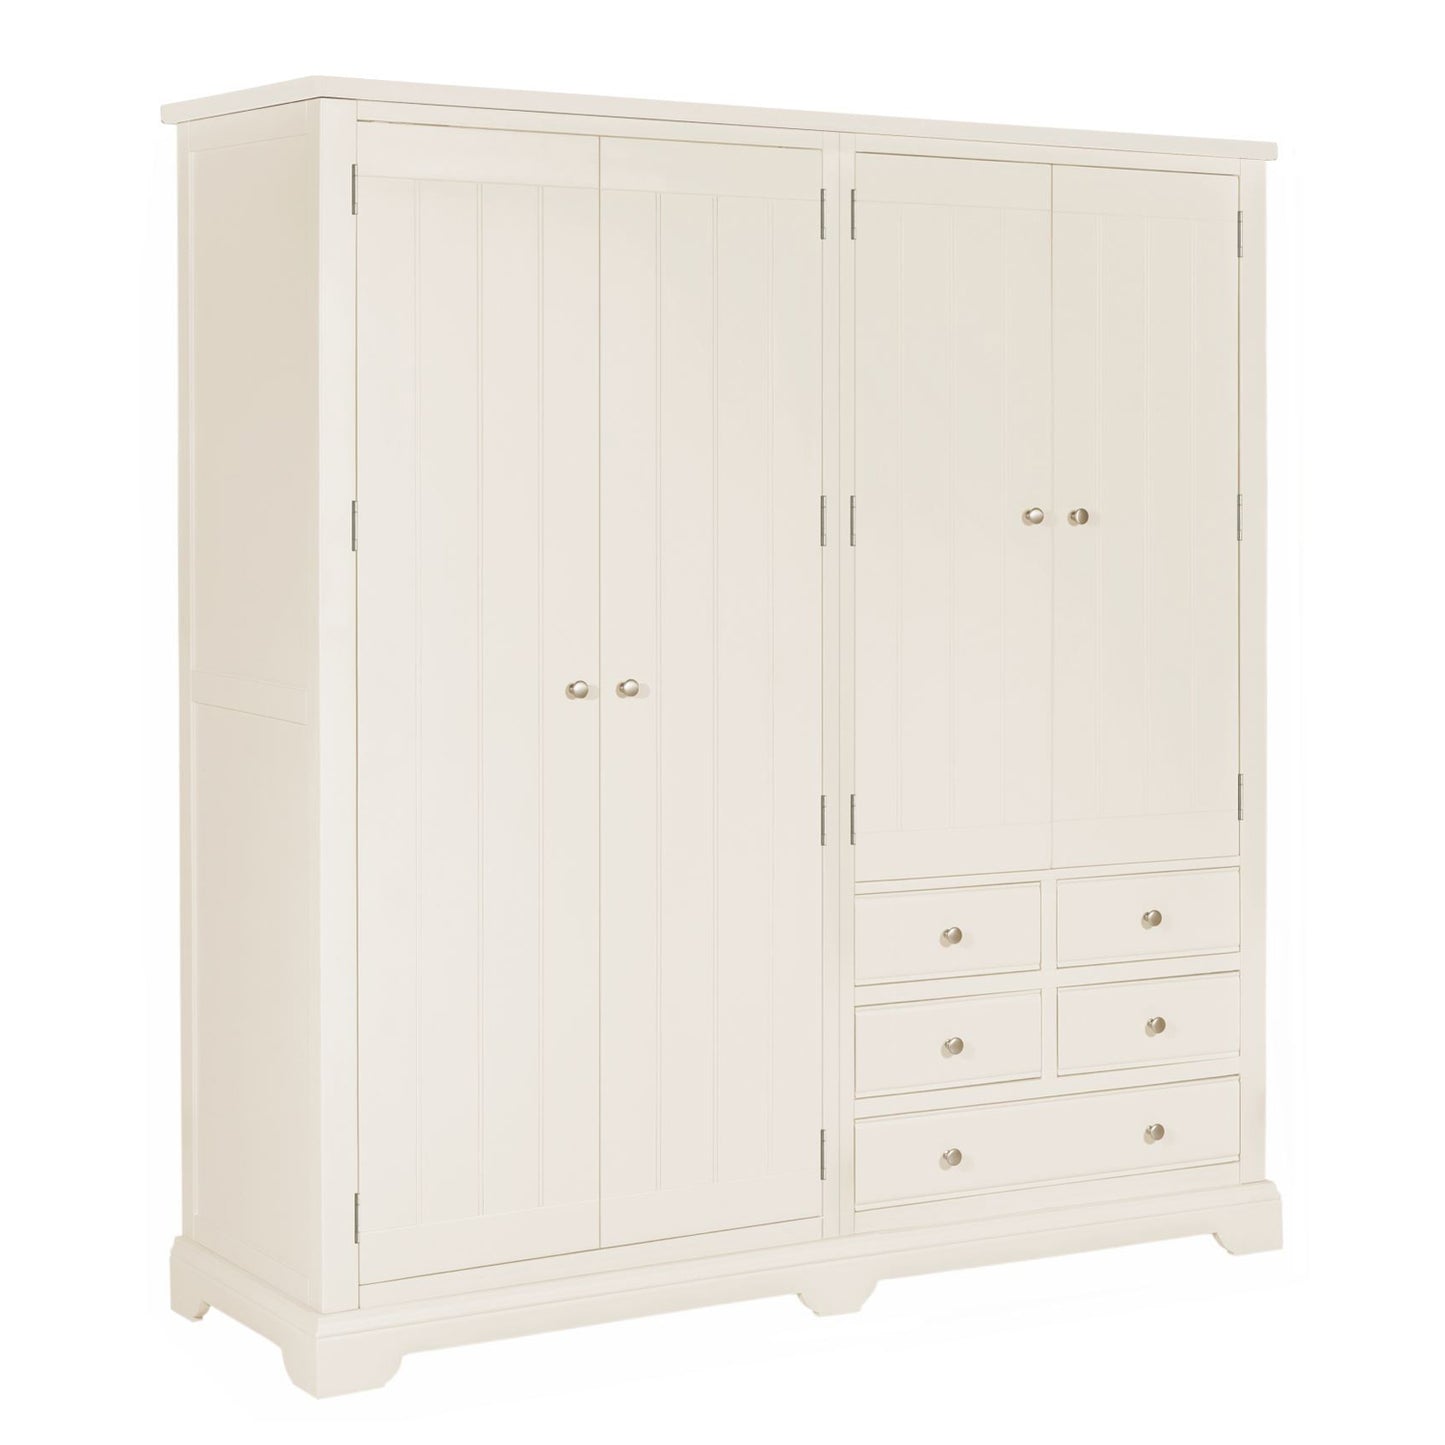 Hardingham White Painted Wardrobe - 4 Door 5 Drawer